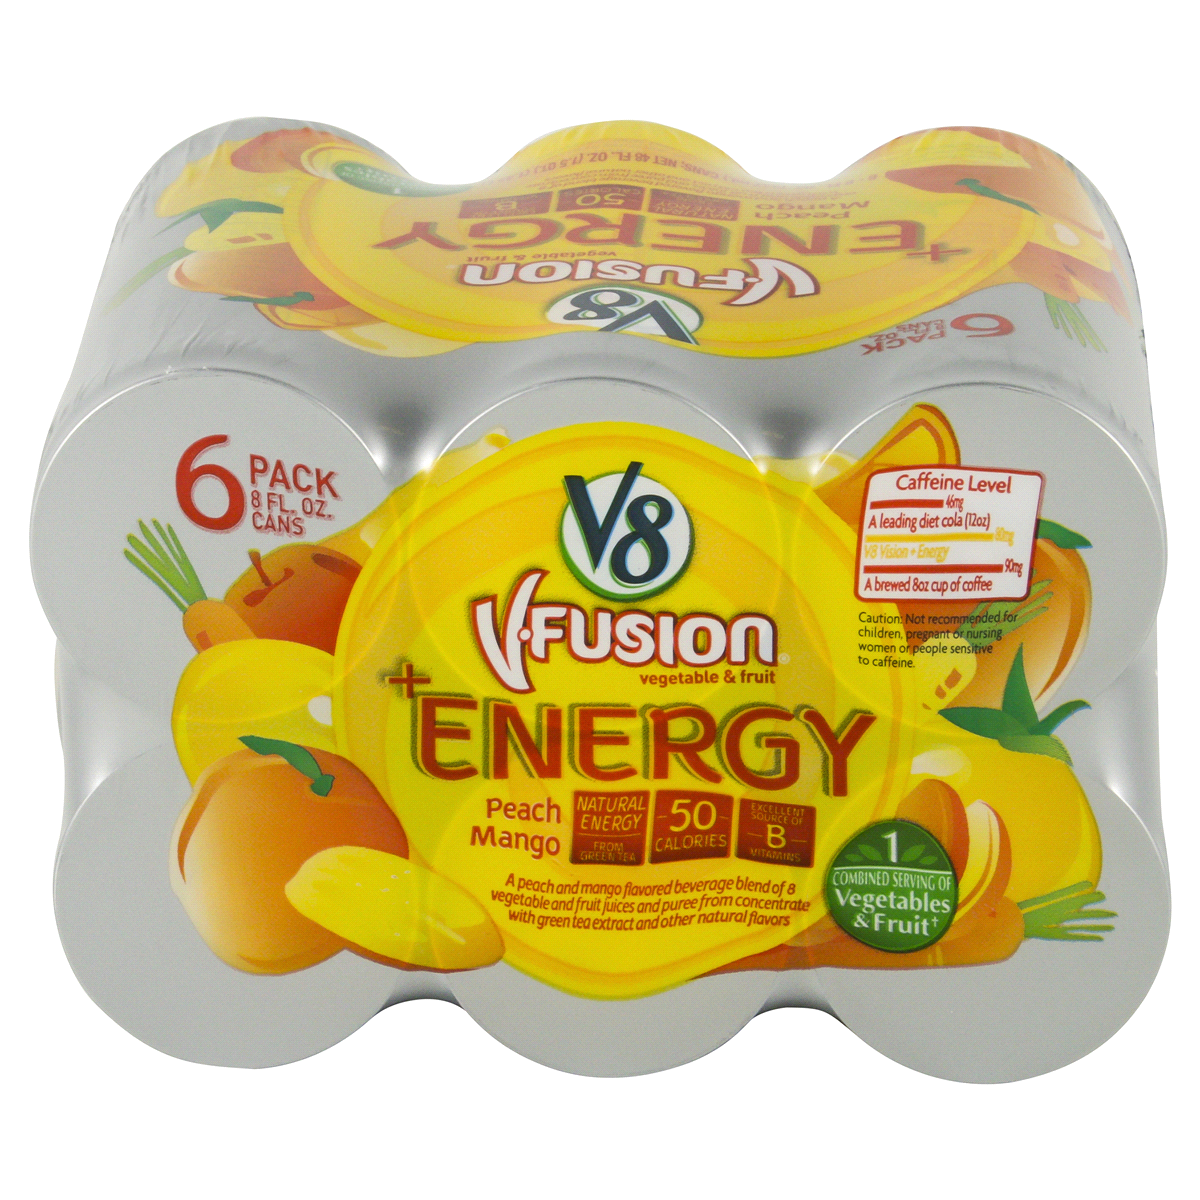 slide 3 of 9, V8 Vfusion Energy Peach Mango Vegetable Fruit Juice, 6 ct; 8 oz